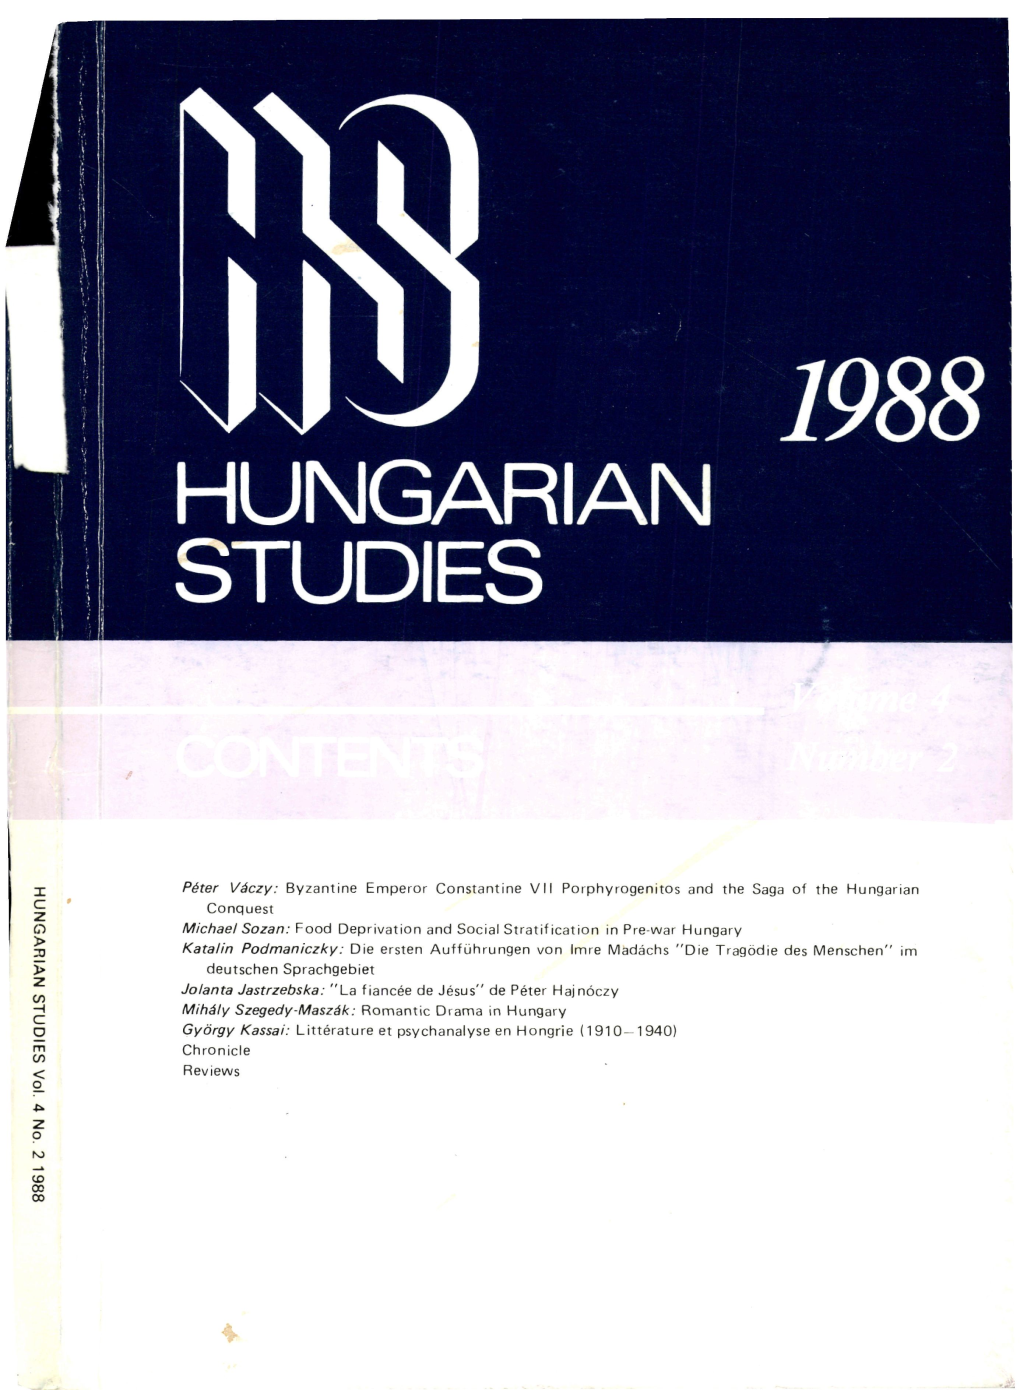 HUNGARIAN STUDIES 4. No. 2. Nemzetközi (1988)